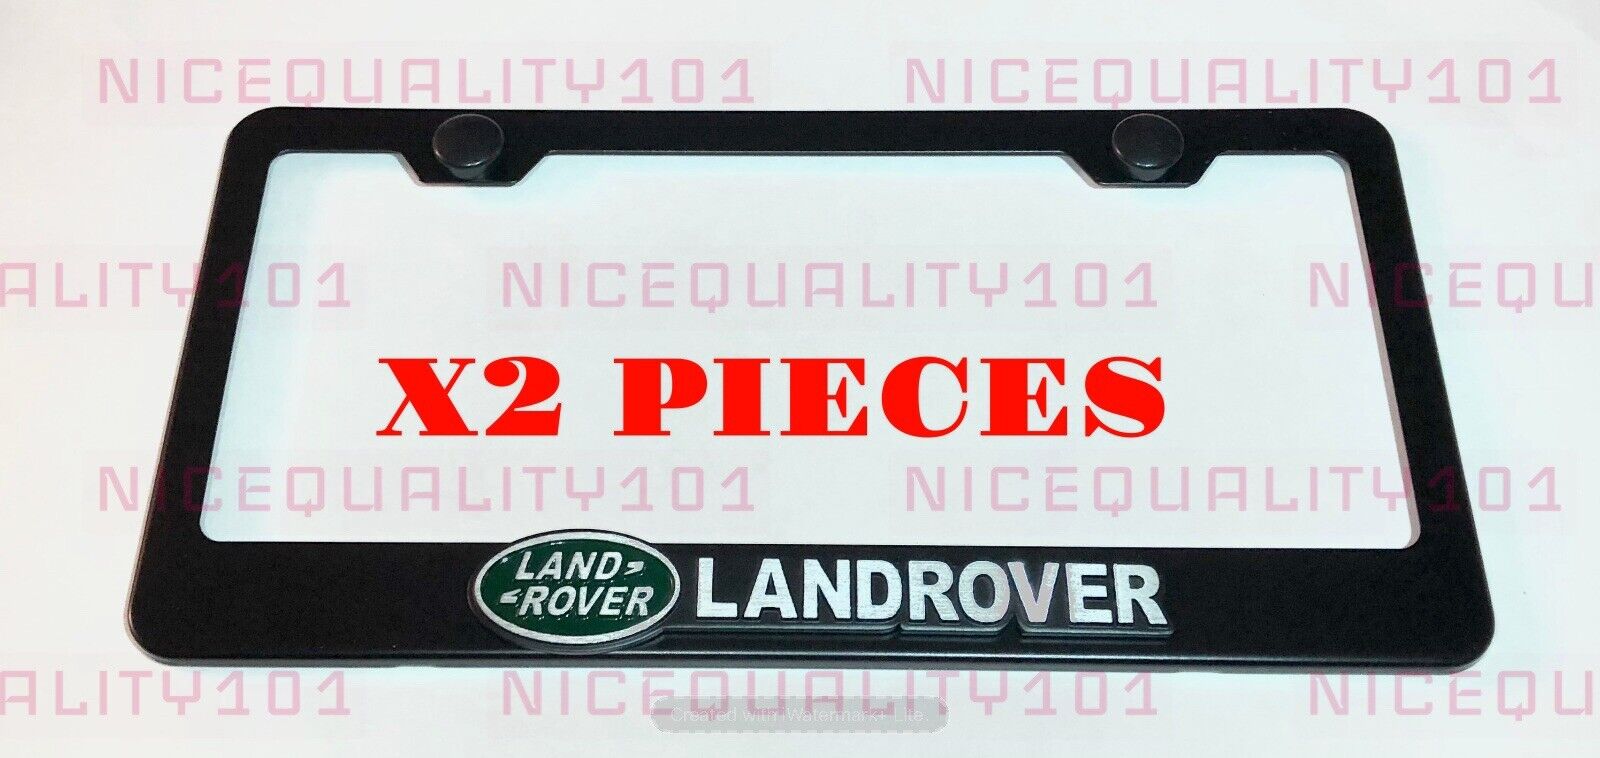 2x 3D Land Rover Stainless Steel Metal Black License Plate Frame Holder